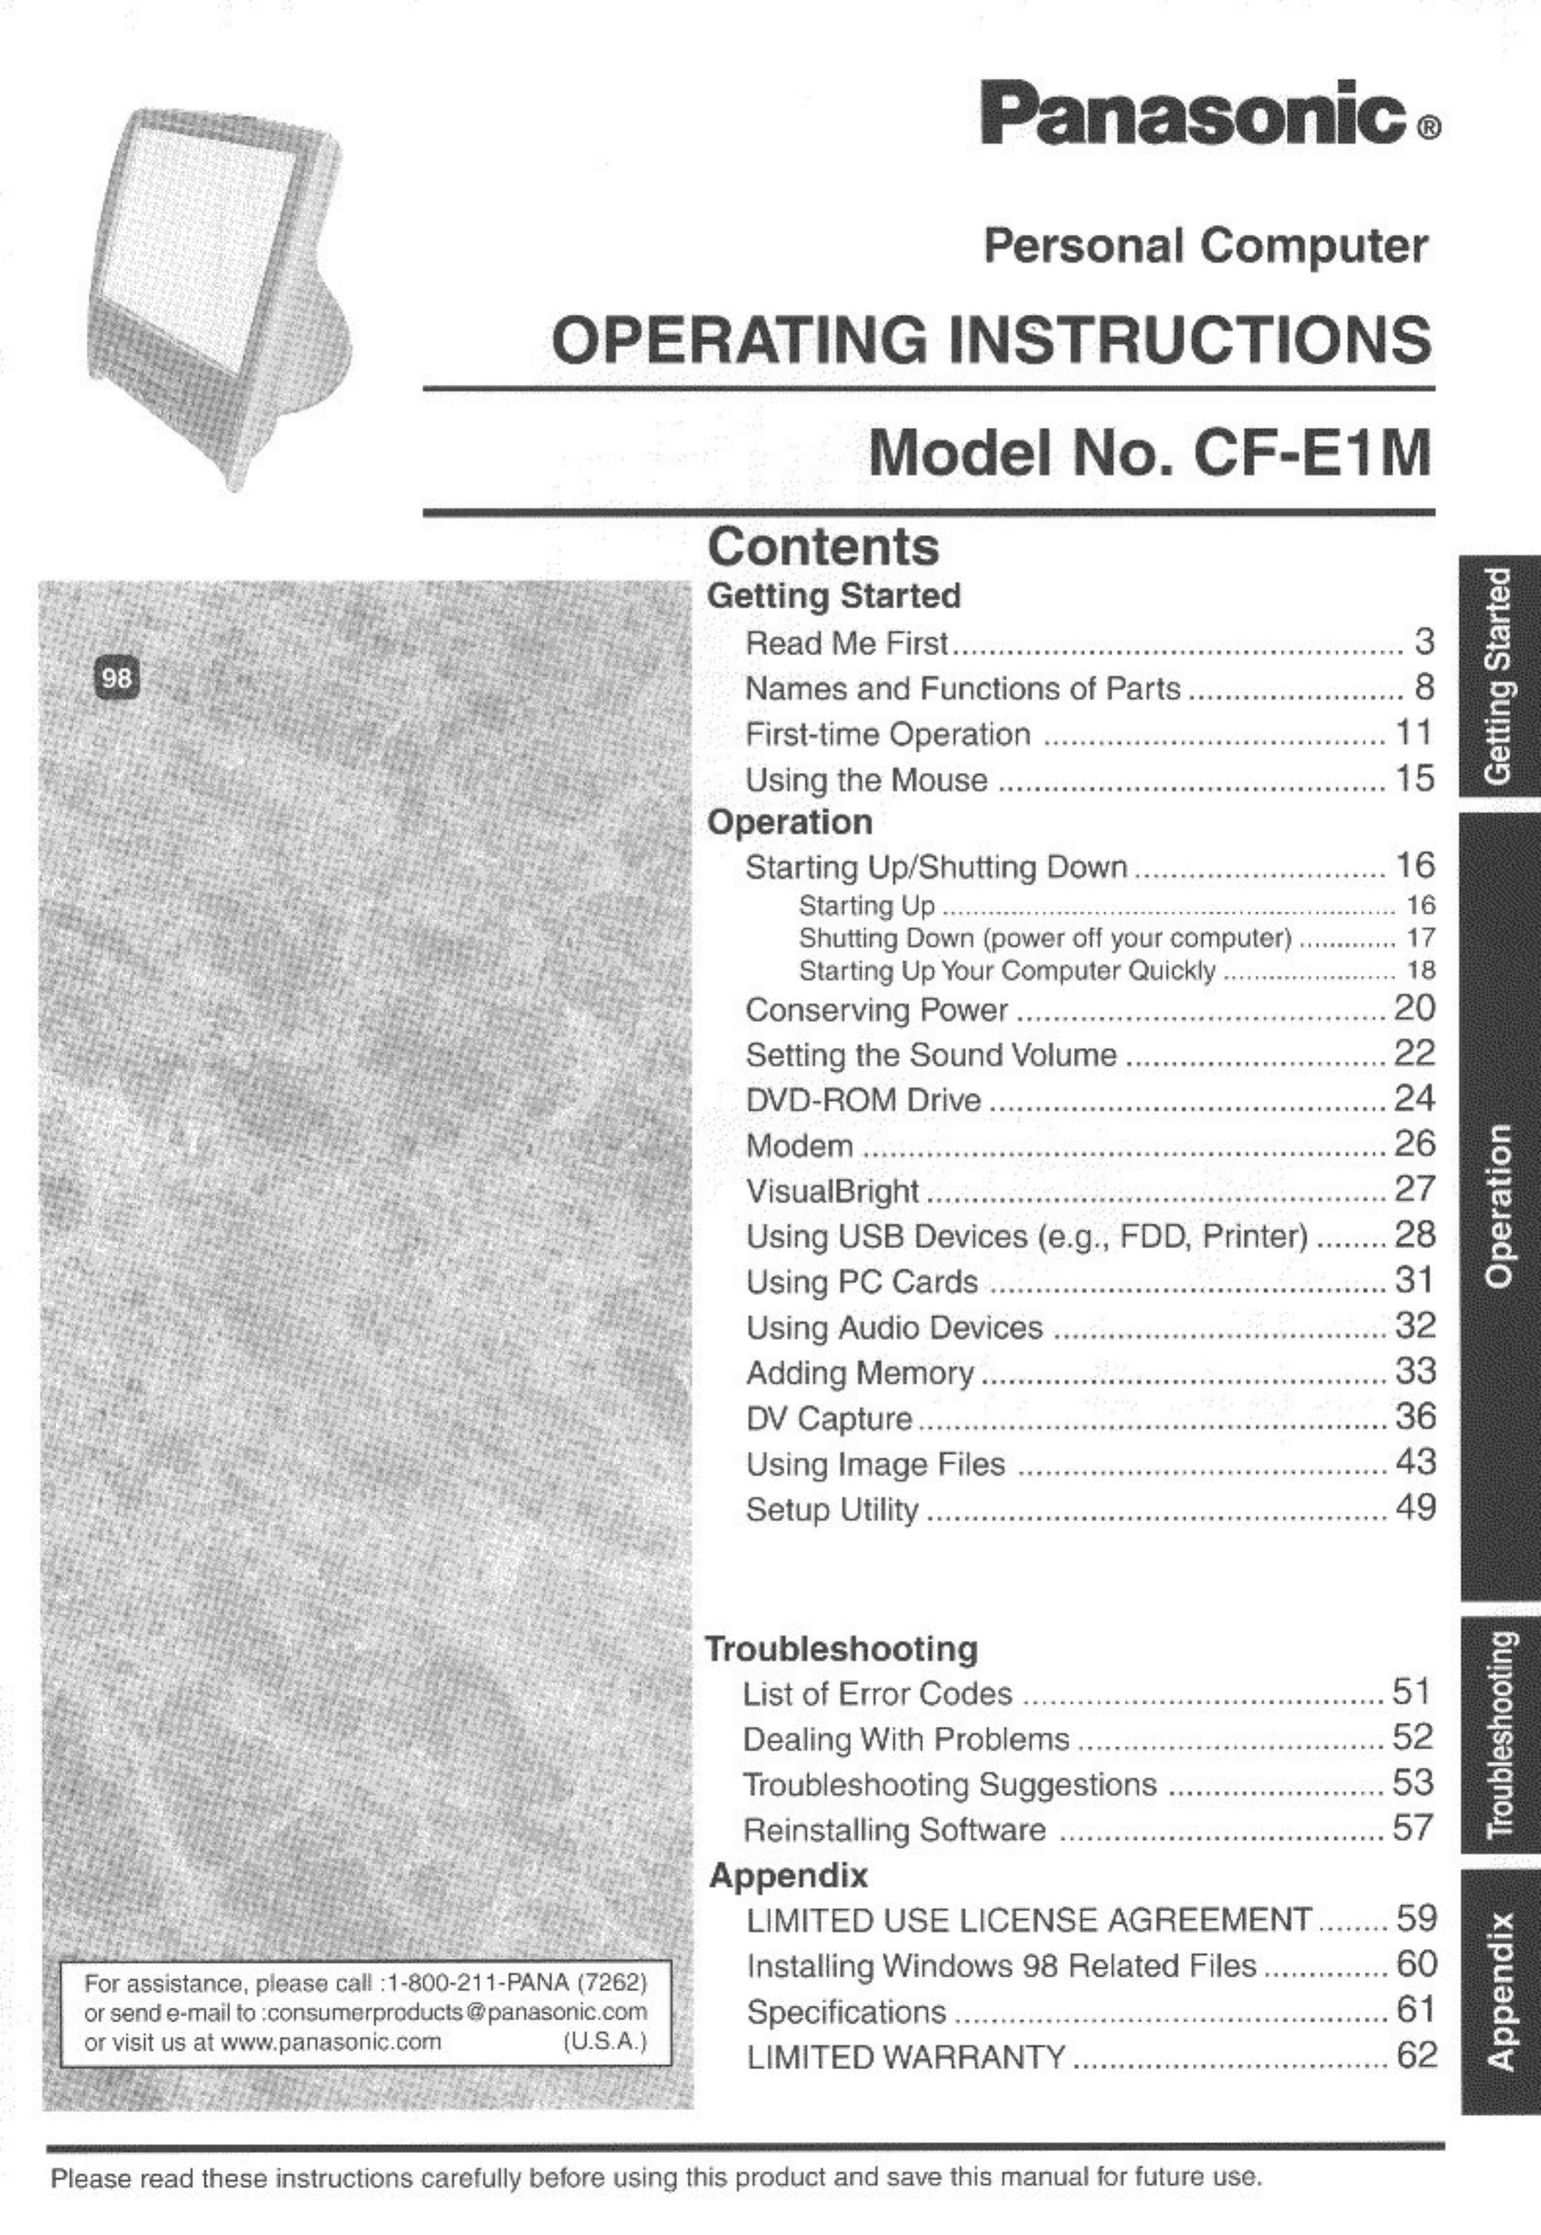 Panasonic CF-E1M Personal Computer User Manual